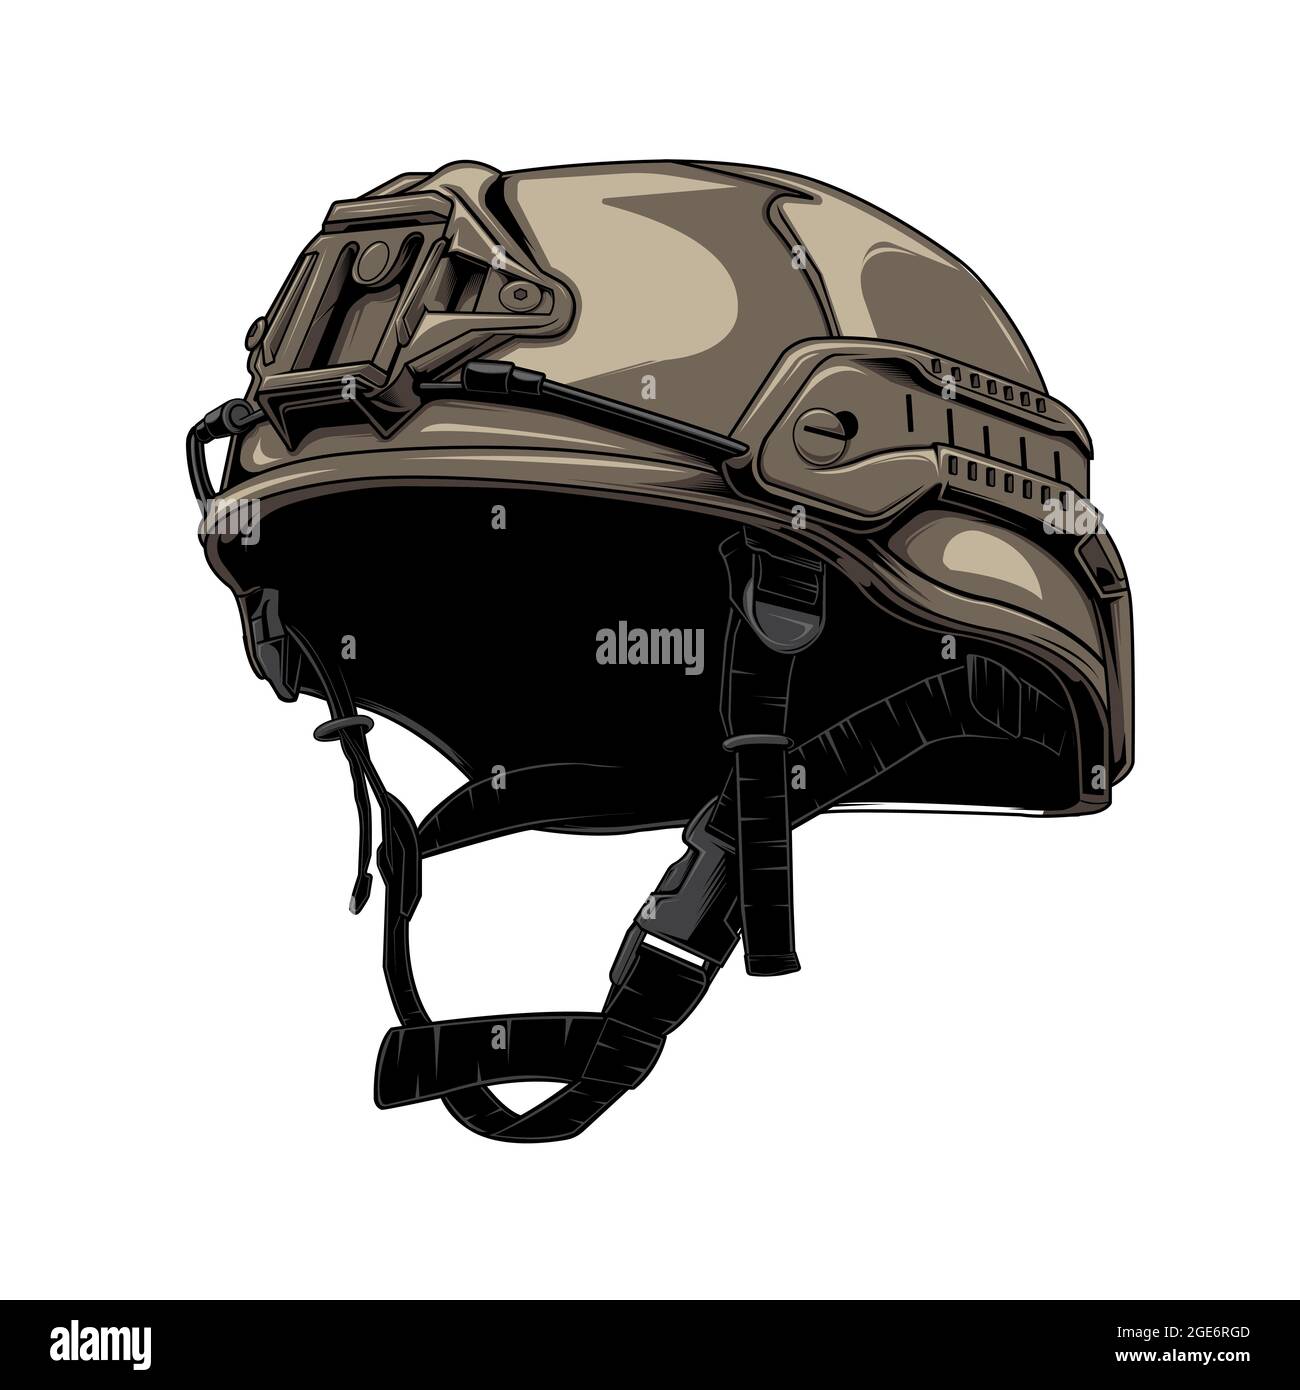 Army helmet Stock Vector Images - Alamy